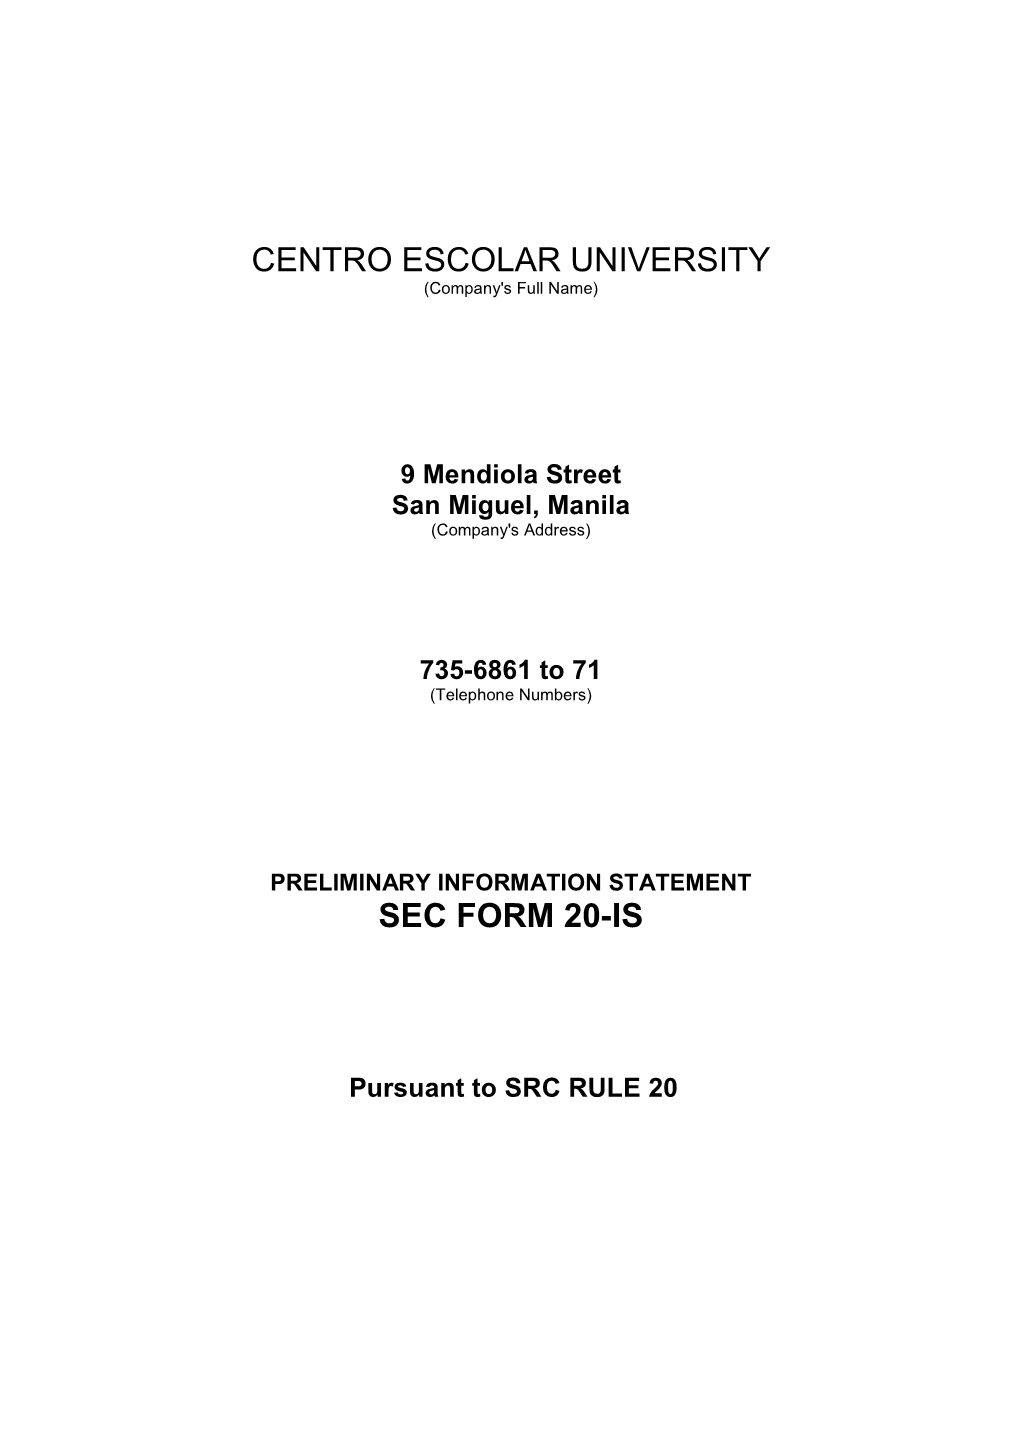 CENTRO ESCOLAR UNIVERSITY SEC Form 20-IS